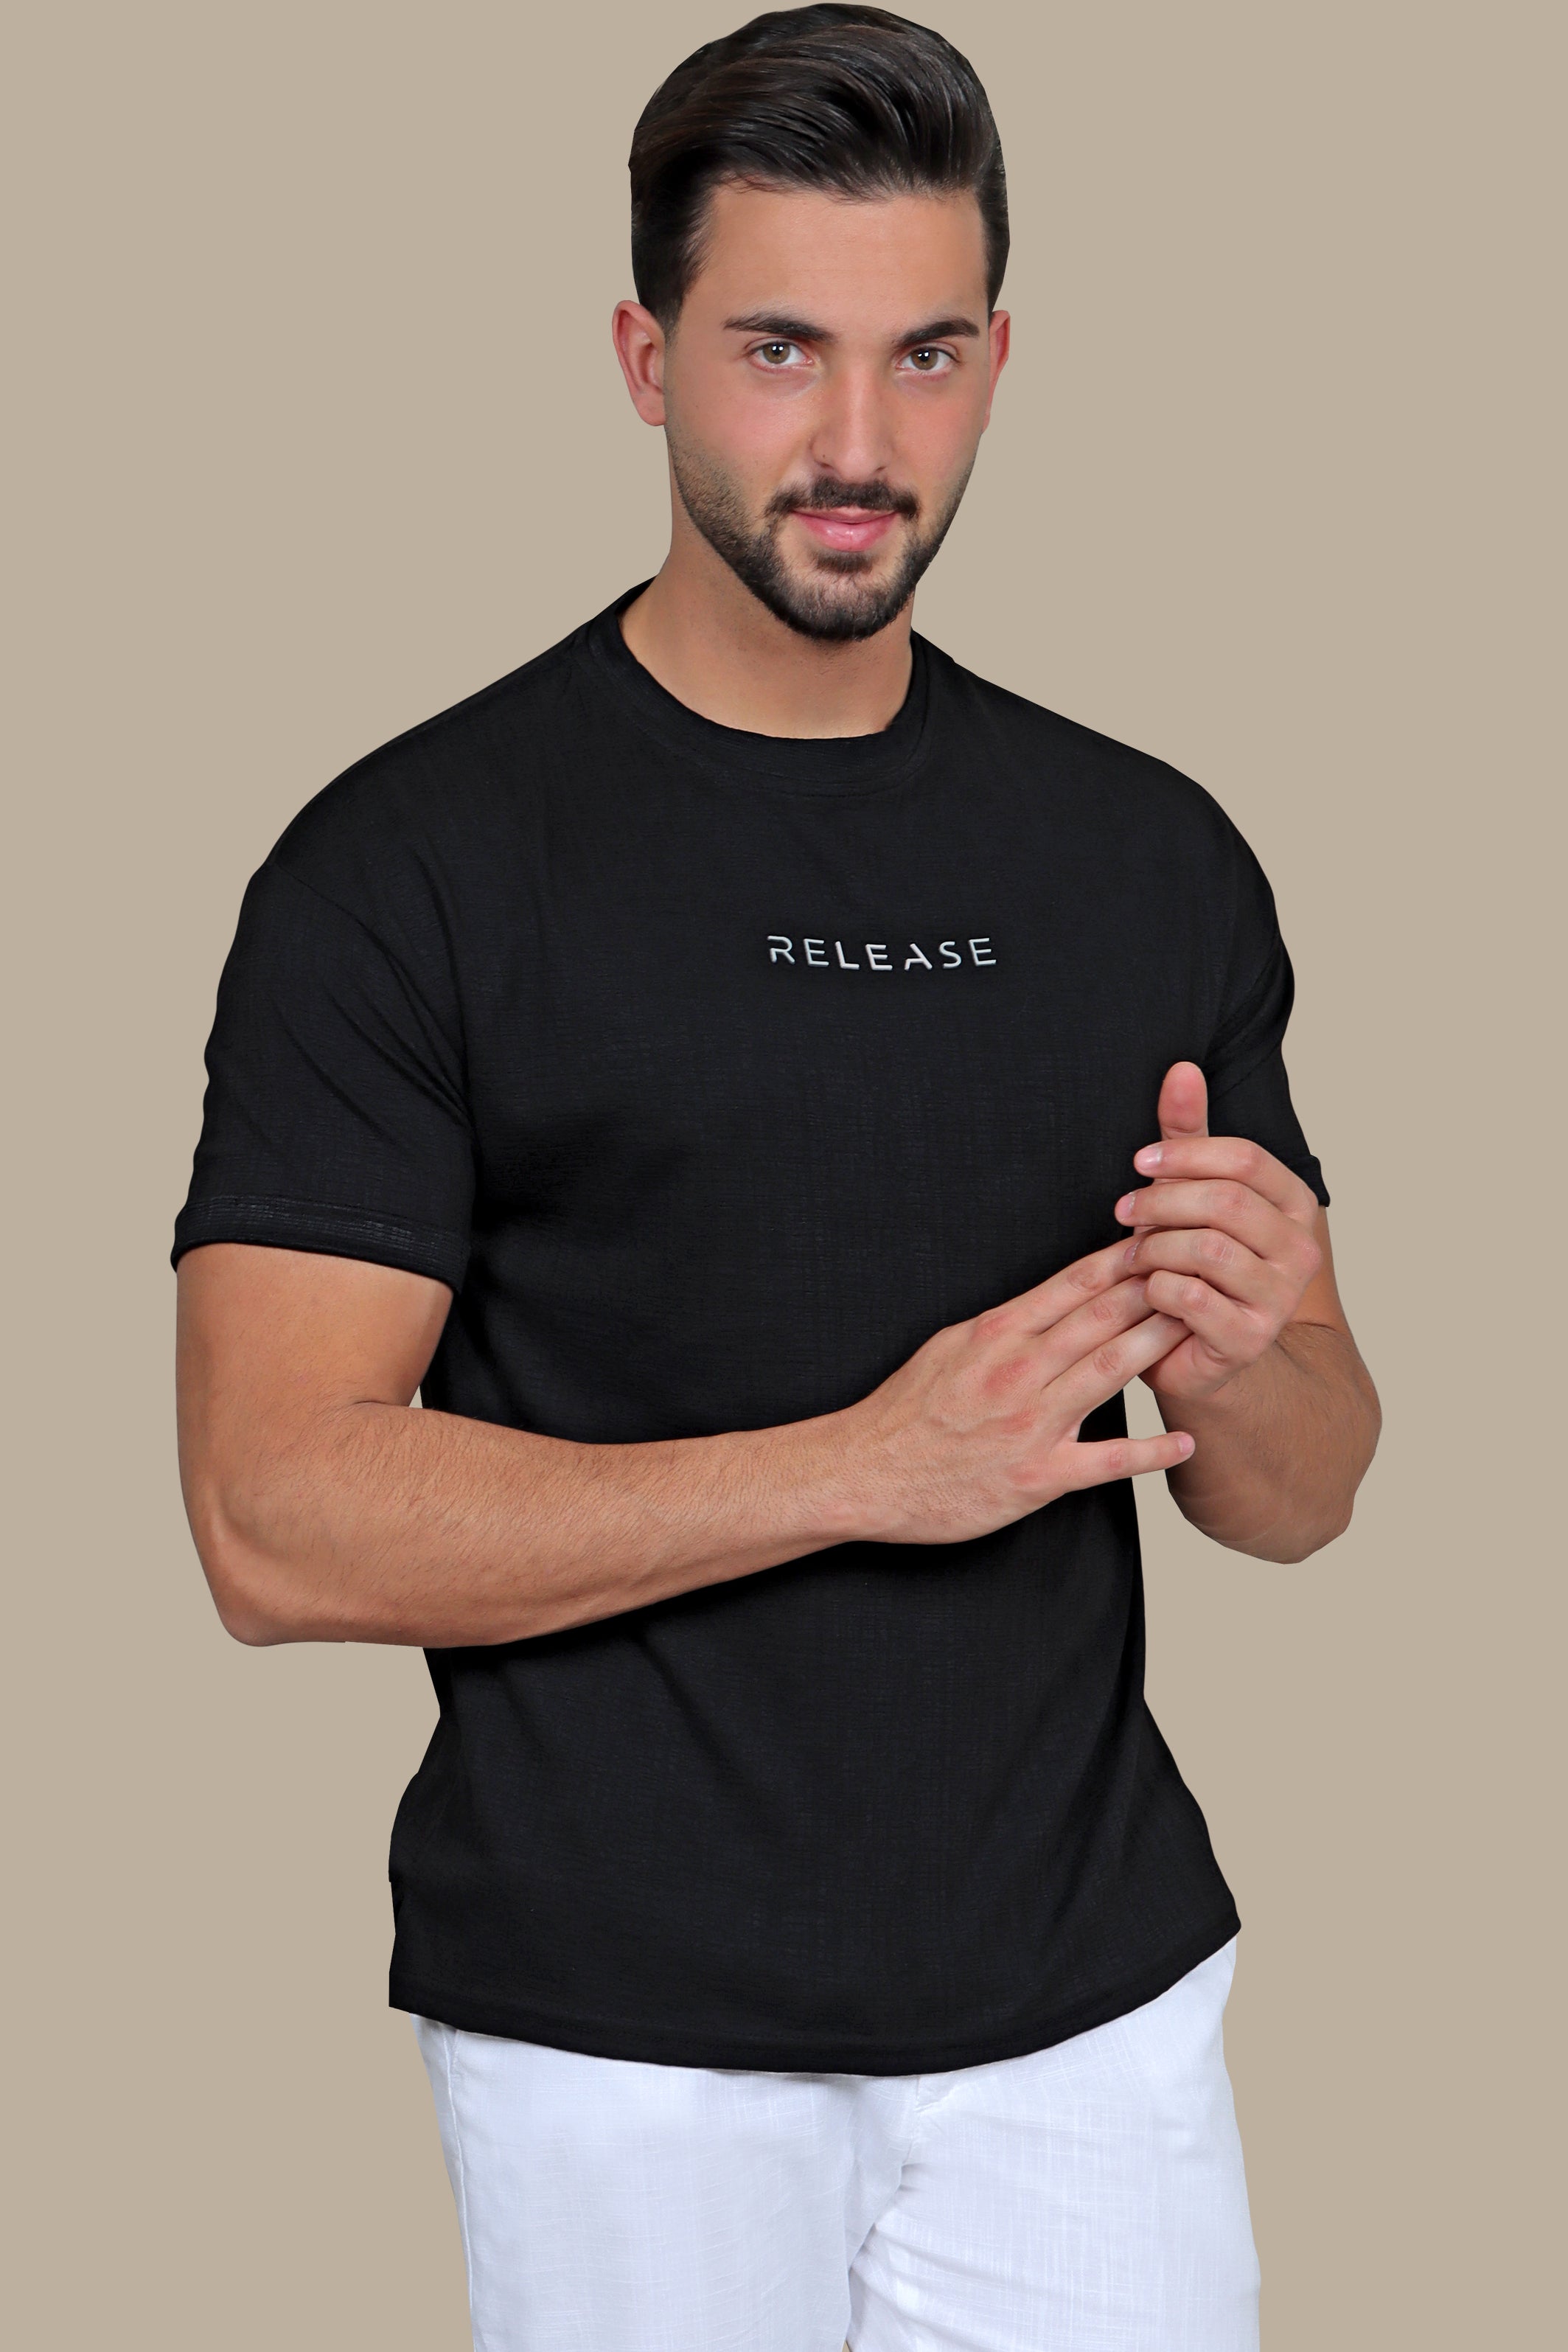 Essential Elegance: Black T-Shirt Release